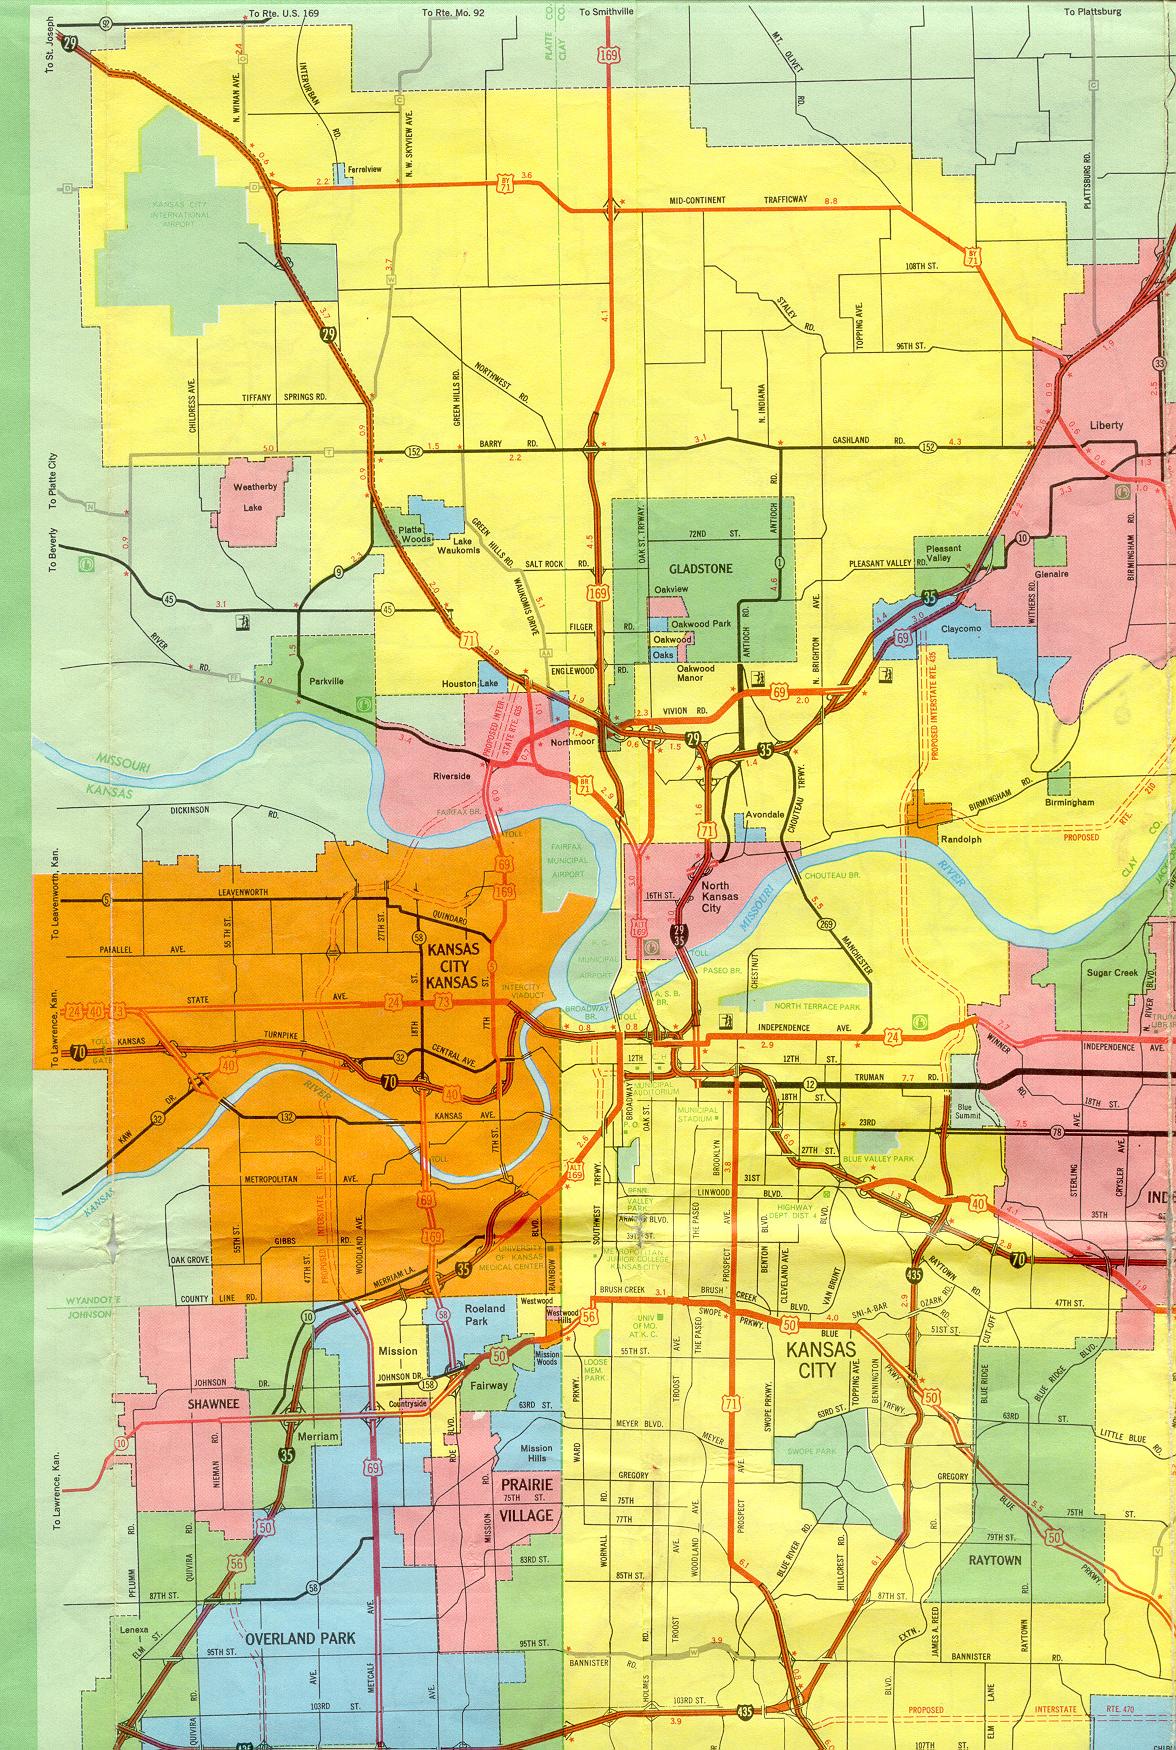 Inset map for Kansas City, Mo. (1969)